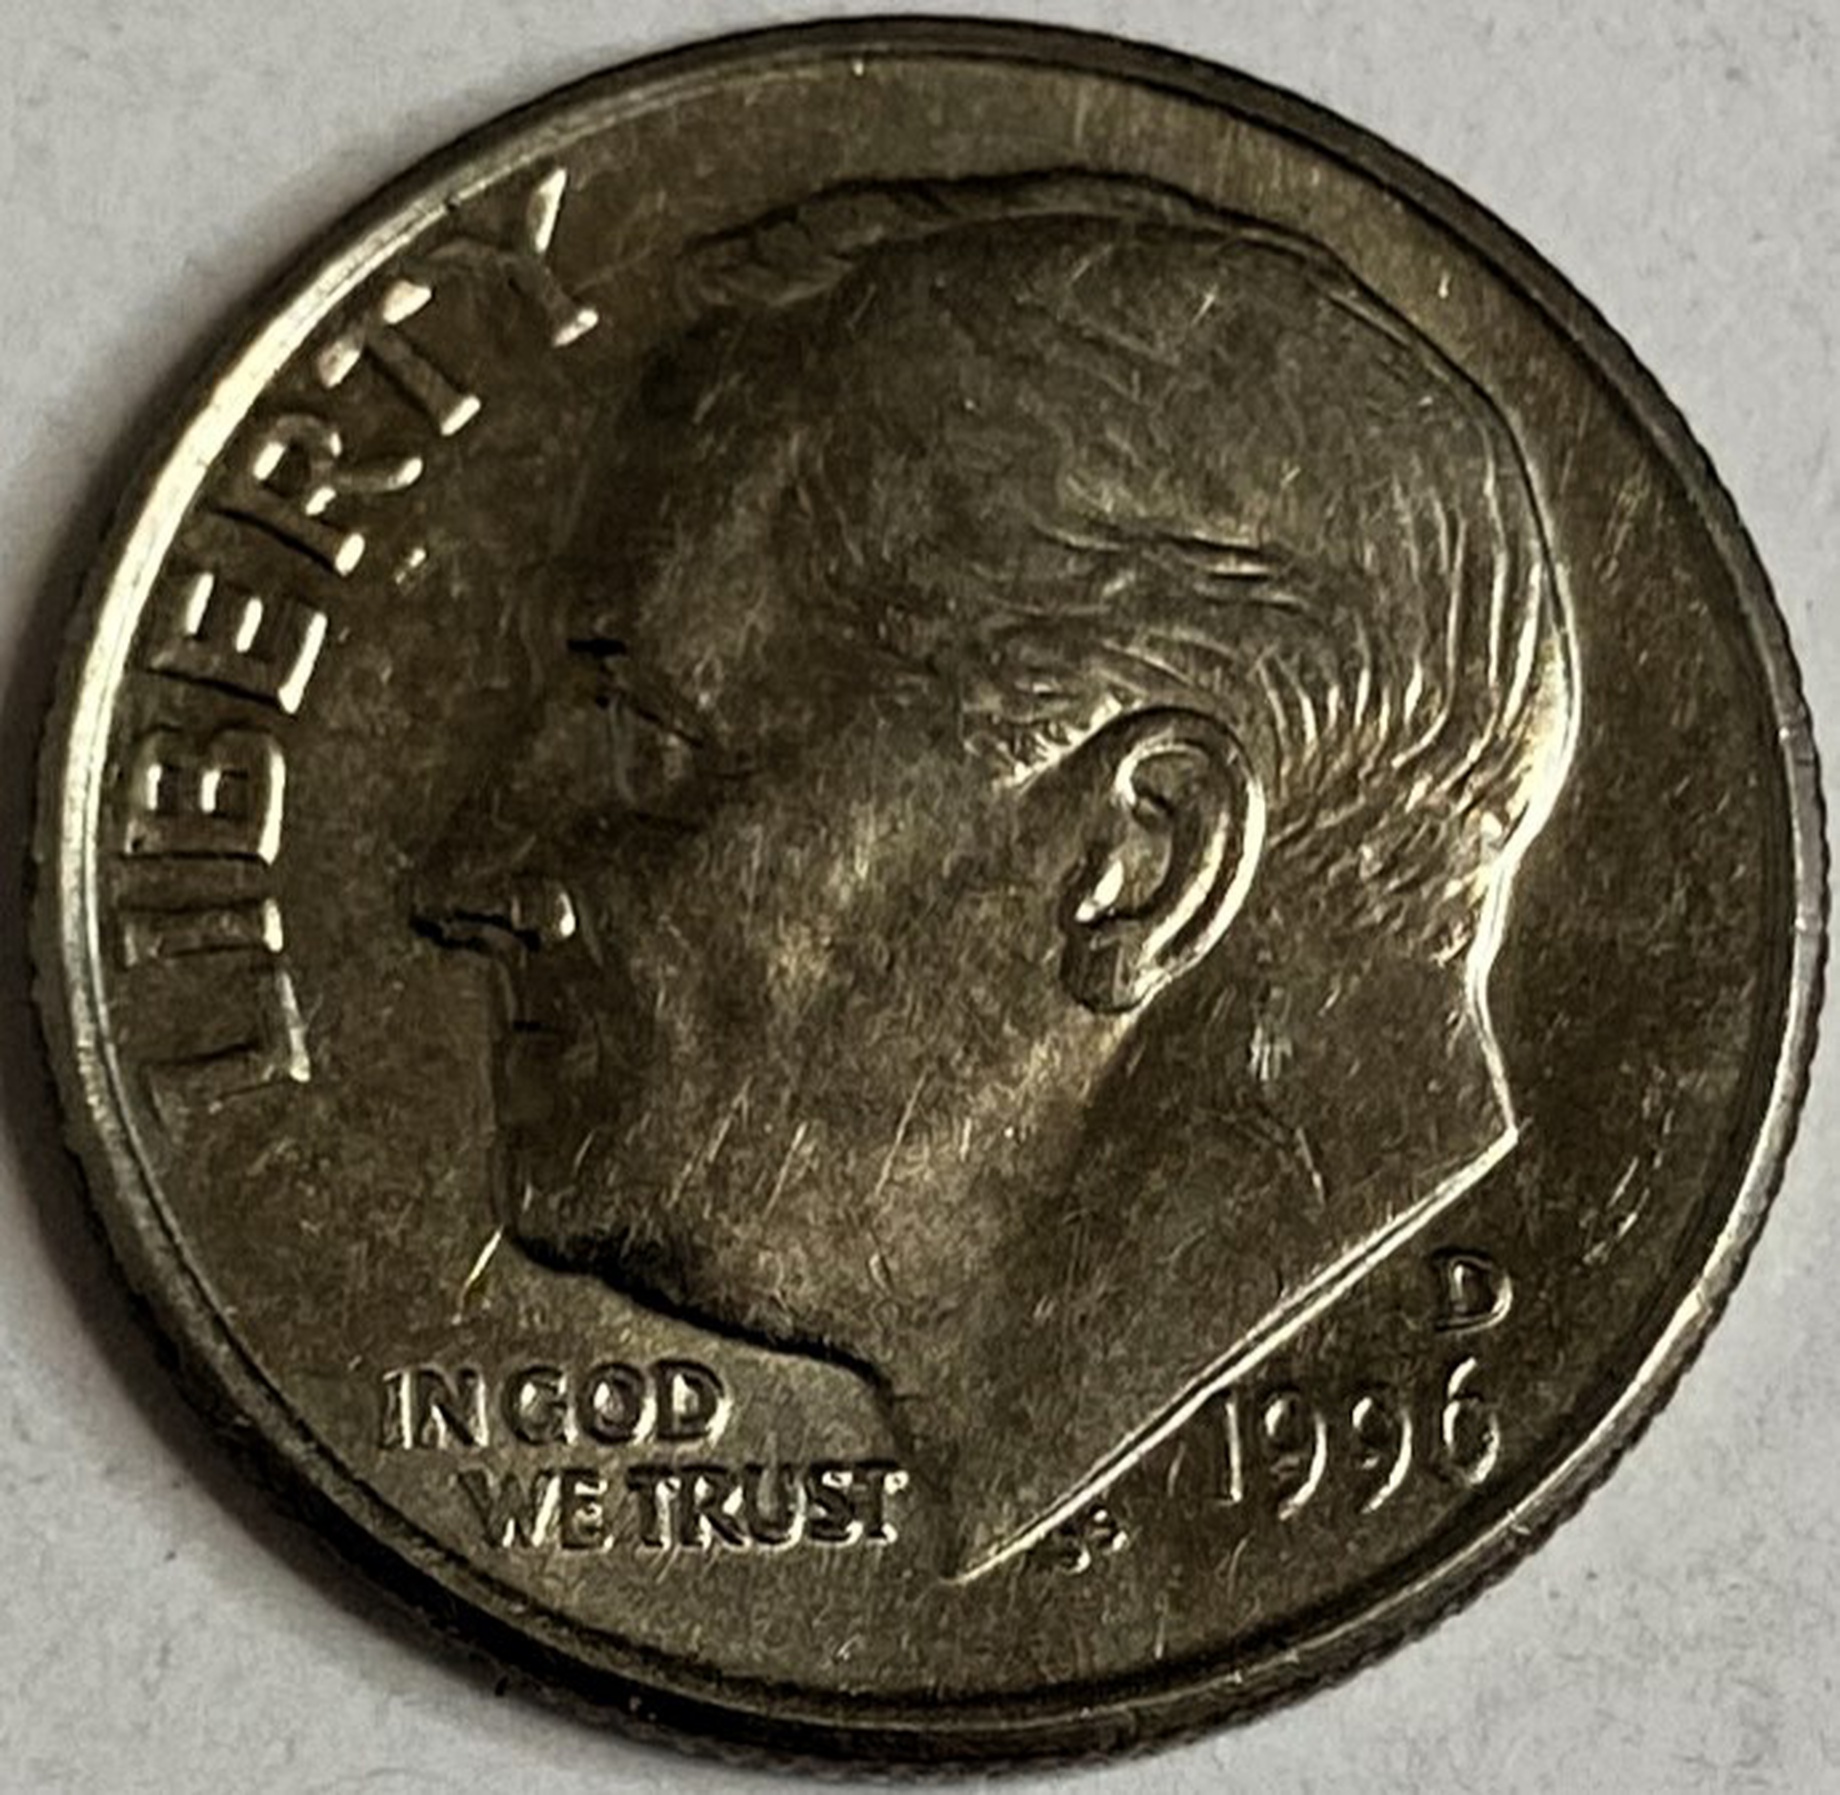 Иностранная монета США 10 центов 1996 год Америка